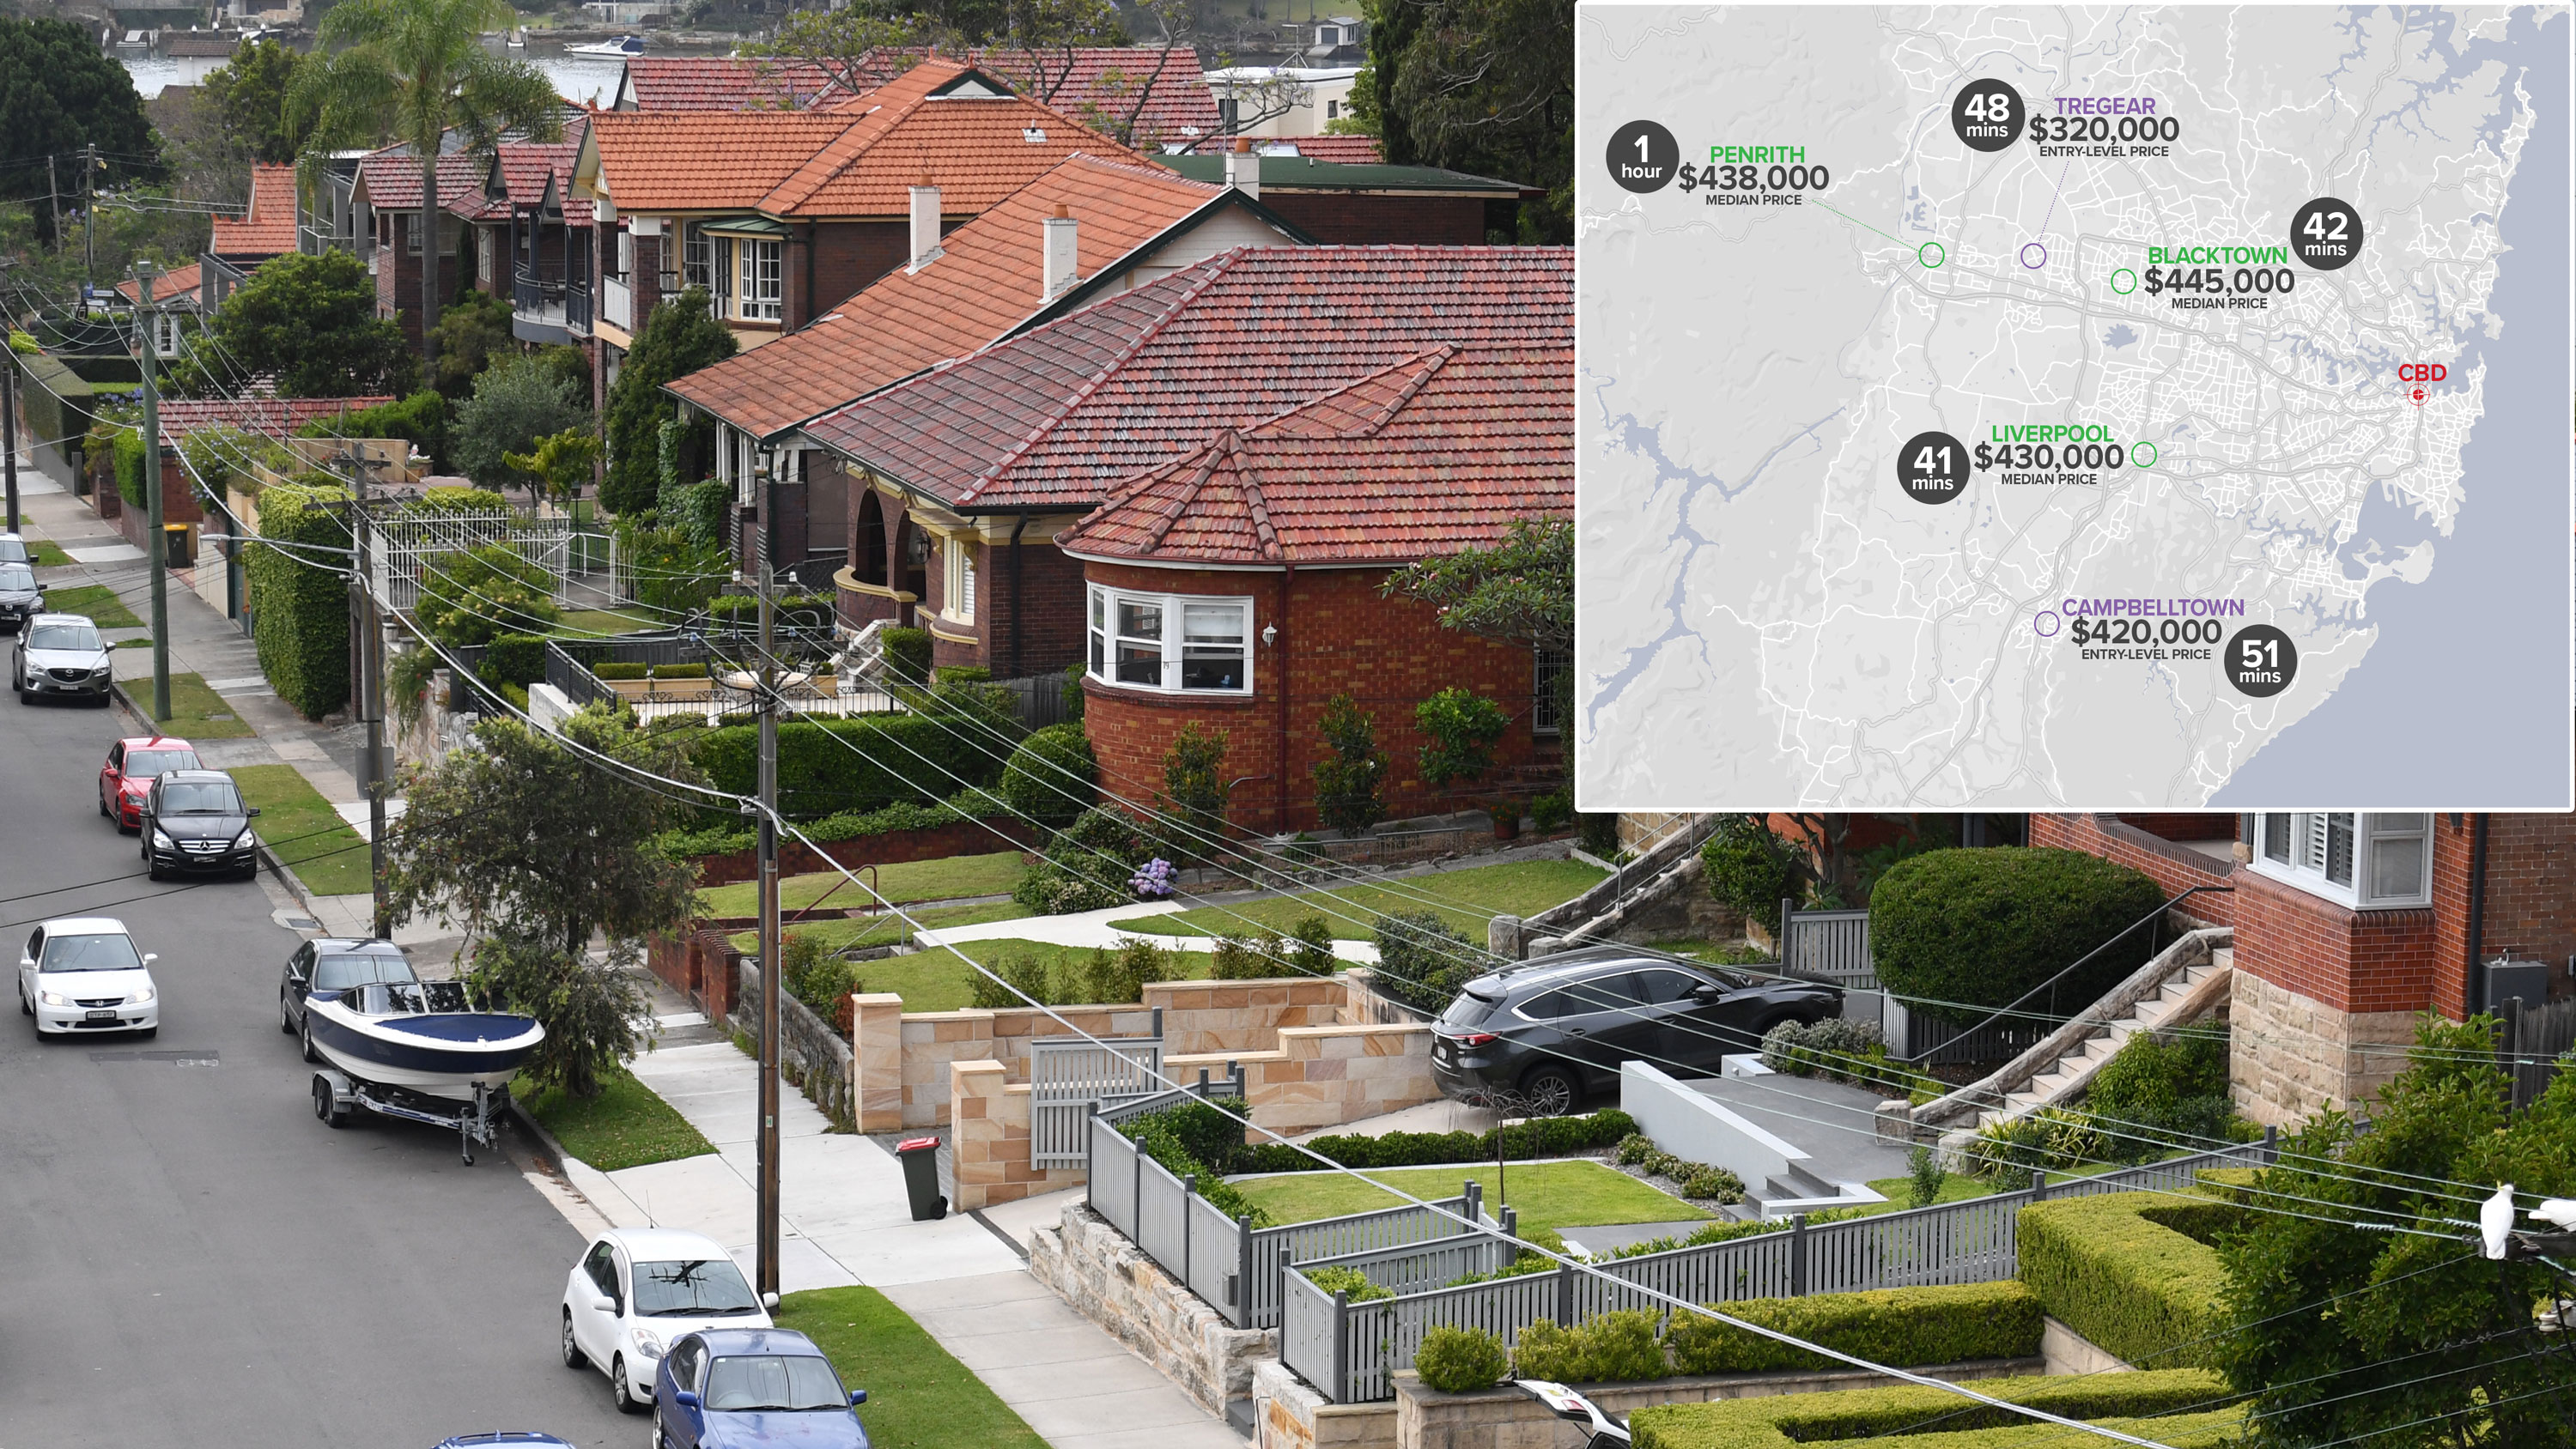 Housing property market in Australia